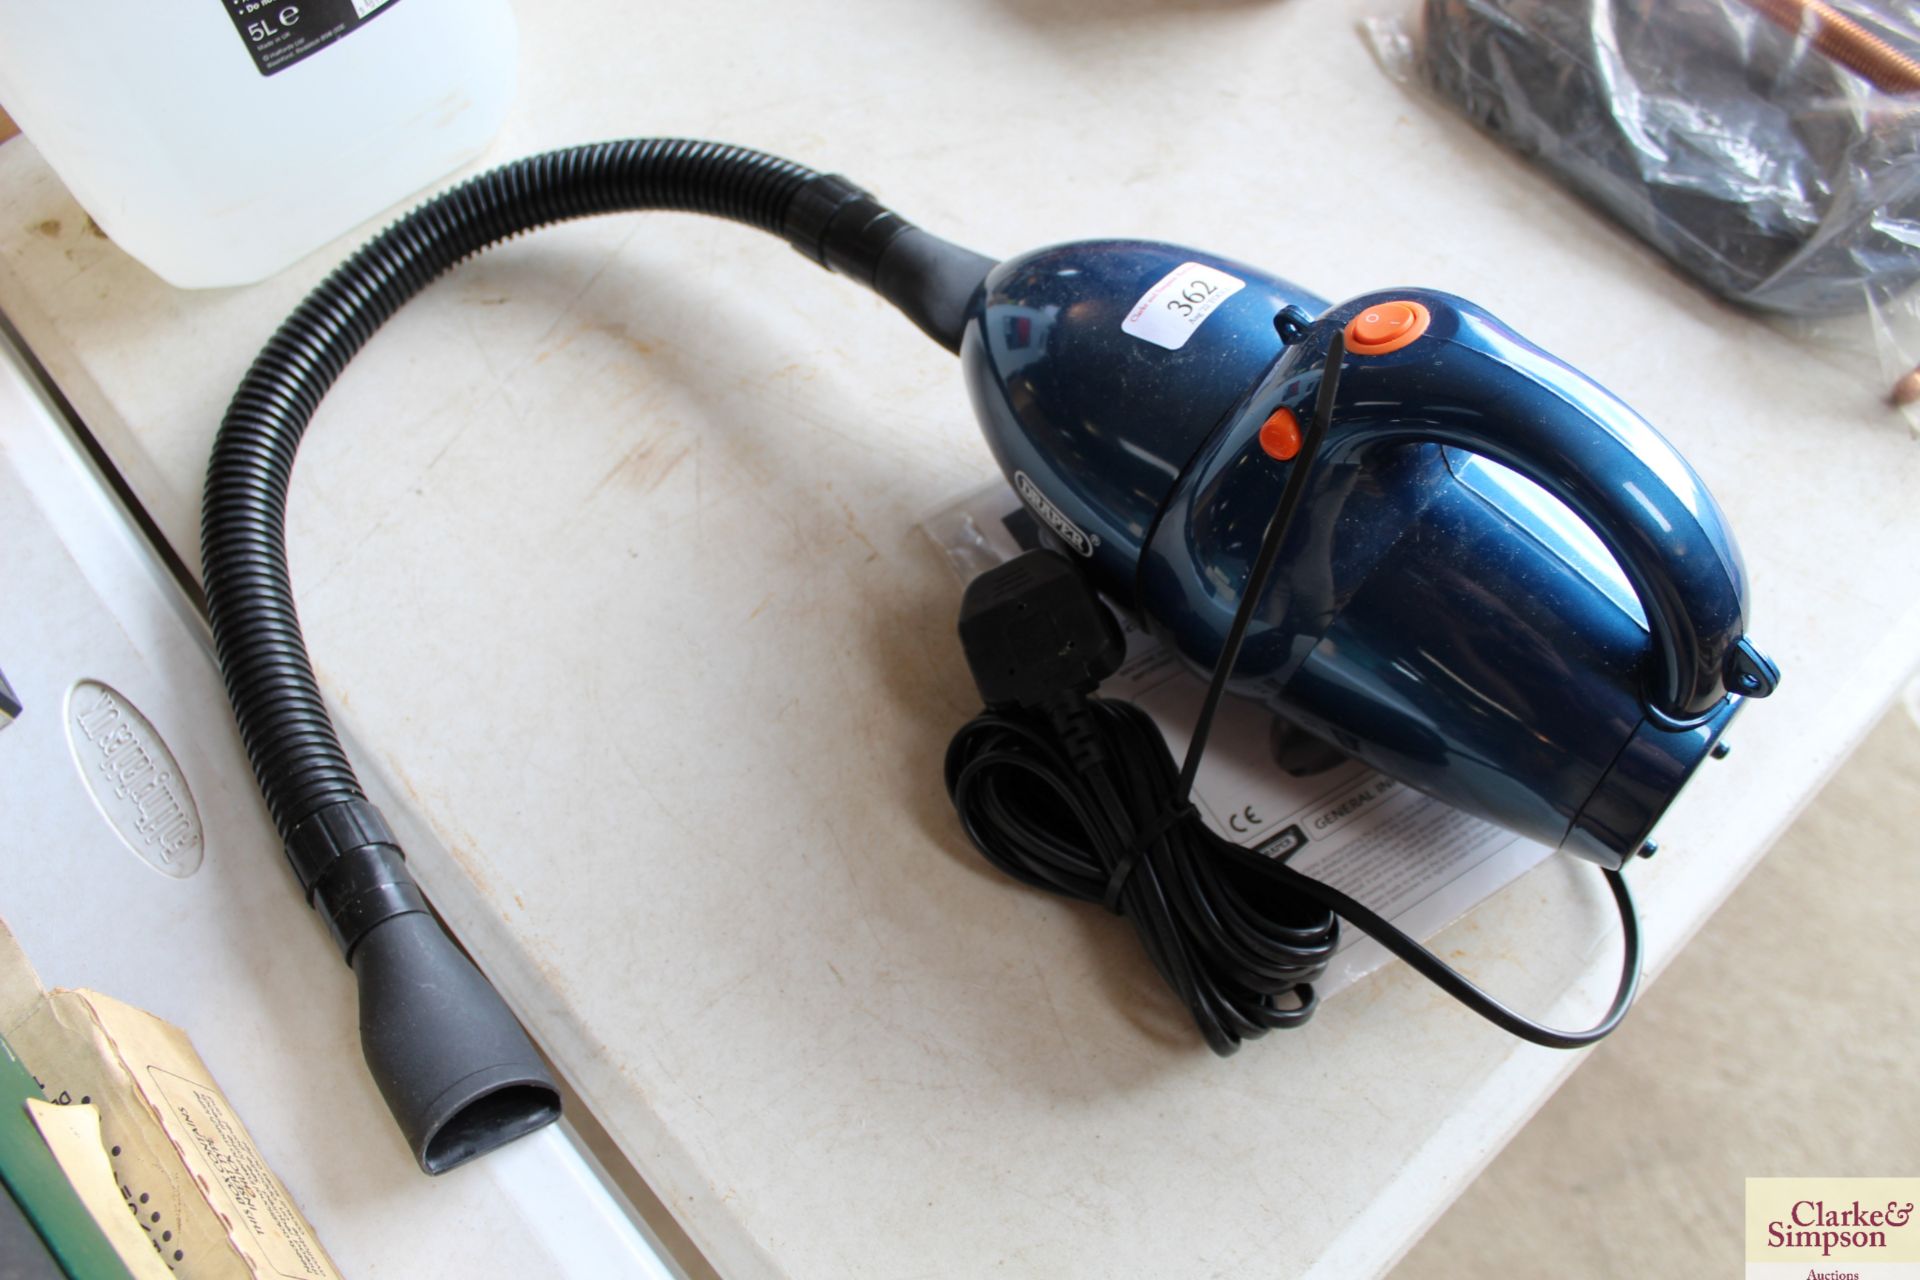 Draper handheld 230v vacuum cleaner.